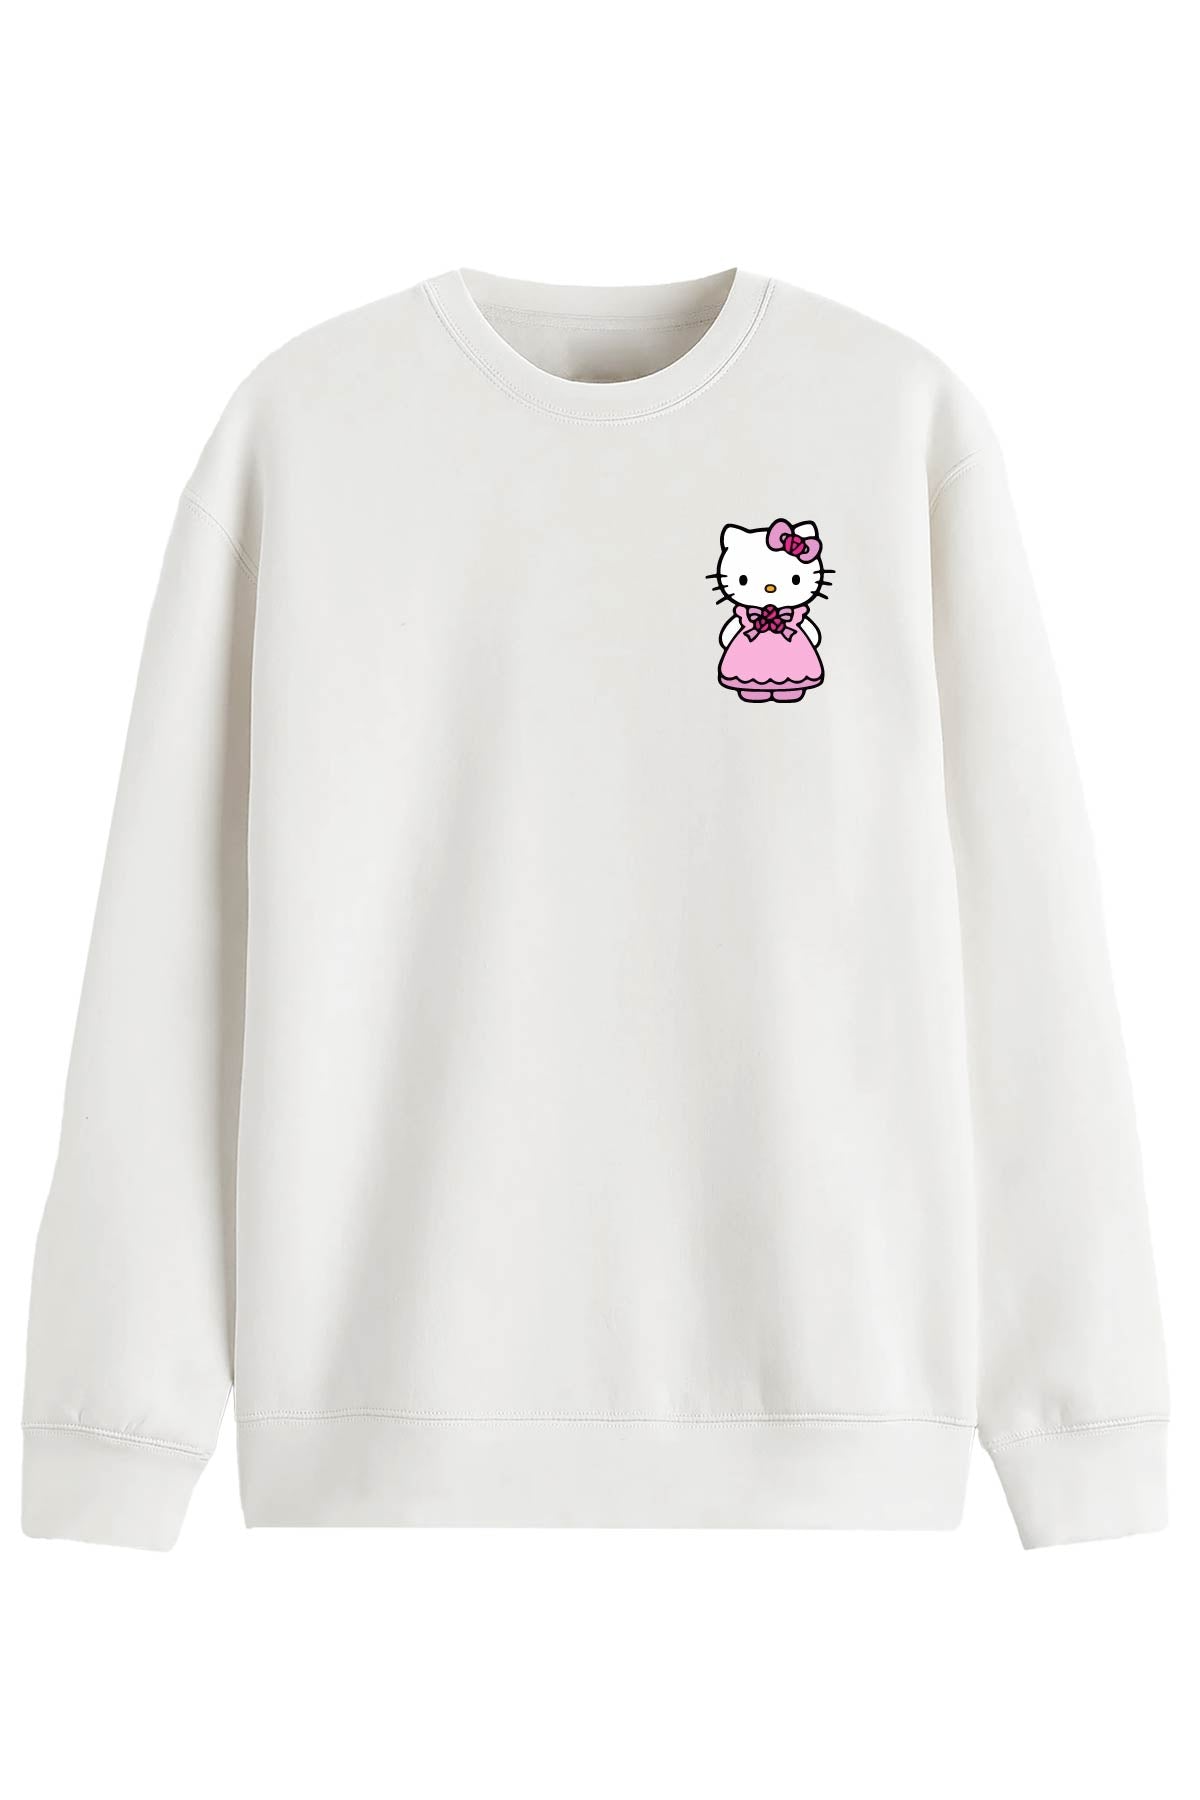 Hello Kitty -  Sweatshirt